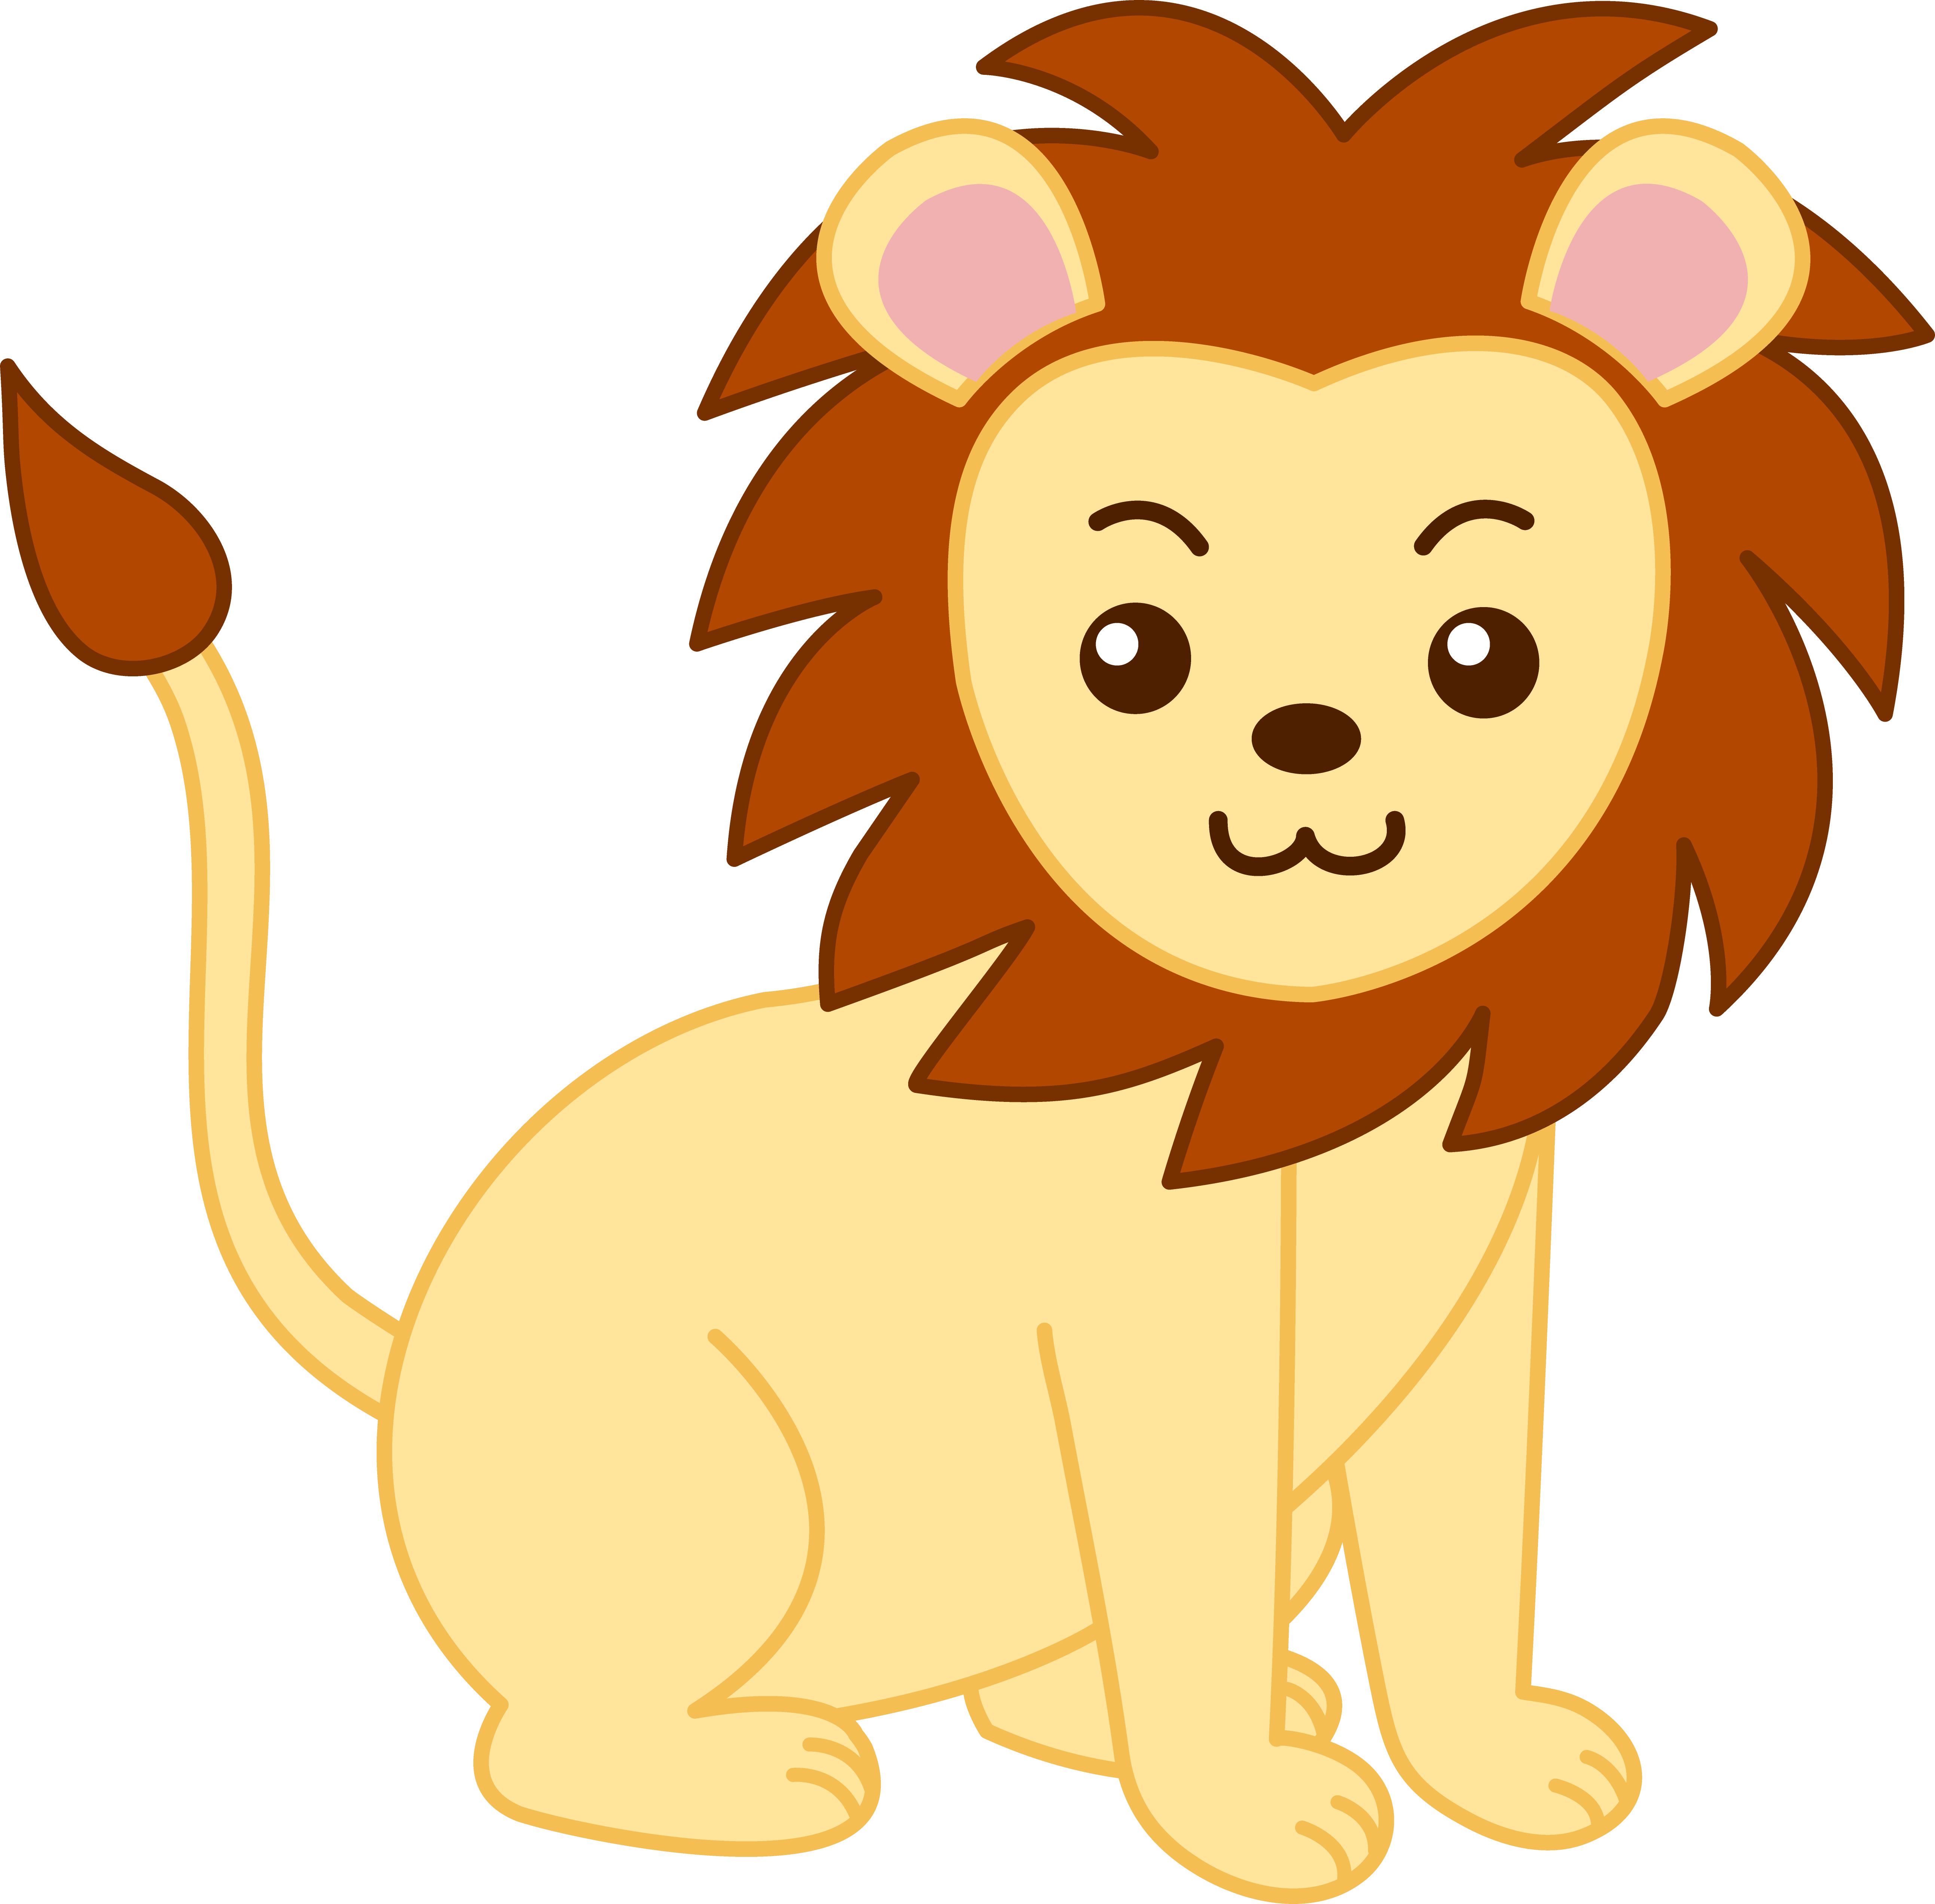 Animated lion clipart - ClipartFox